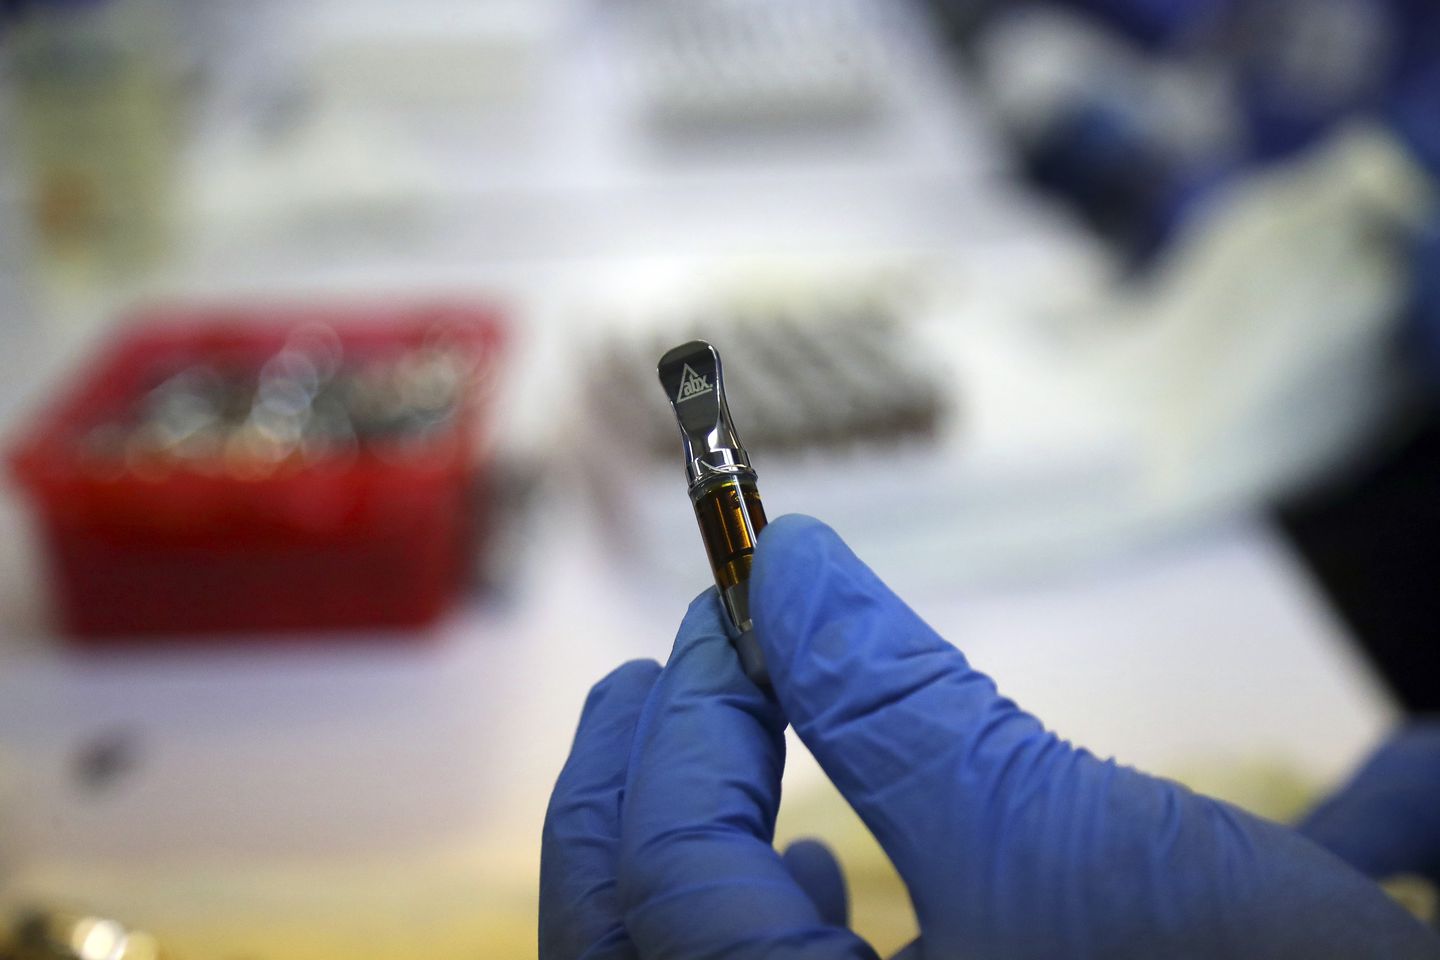 A worker held a filled marijuana vape cartridge at a California cannabis facility in 2018.